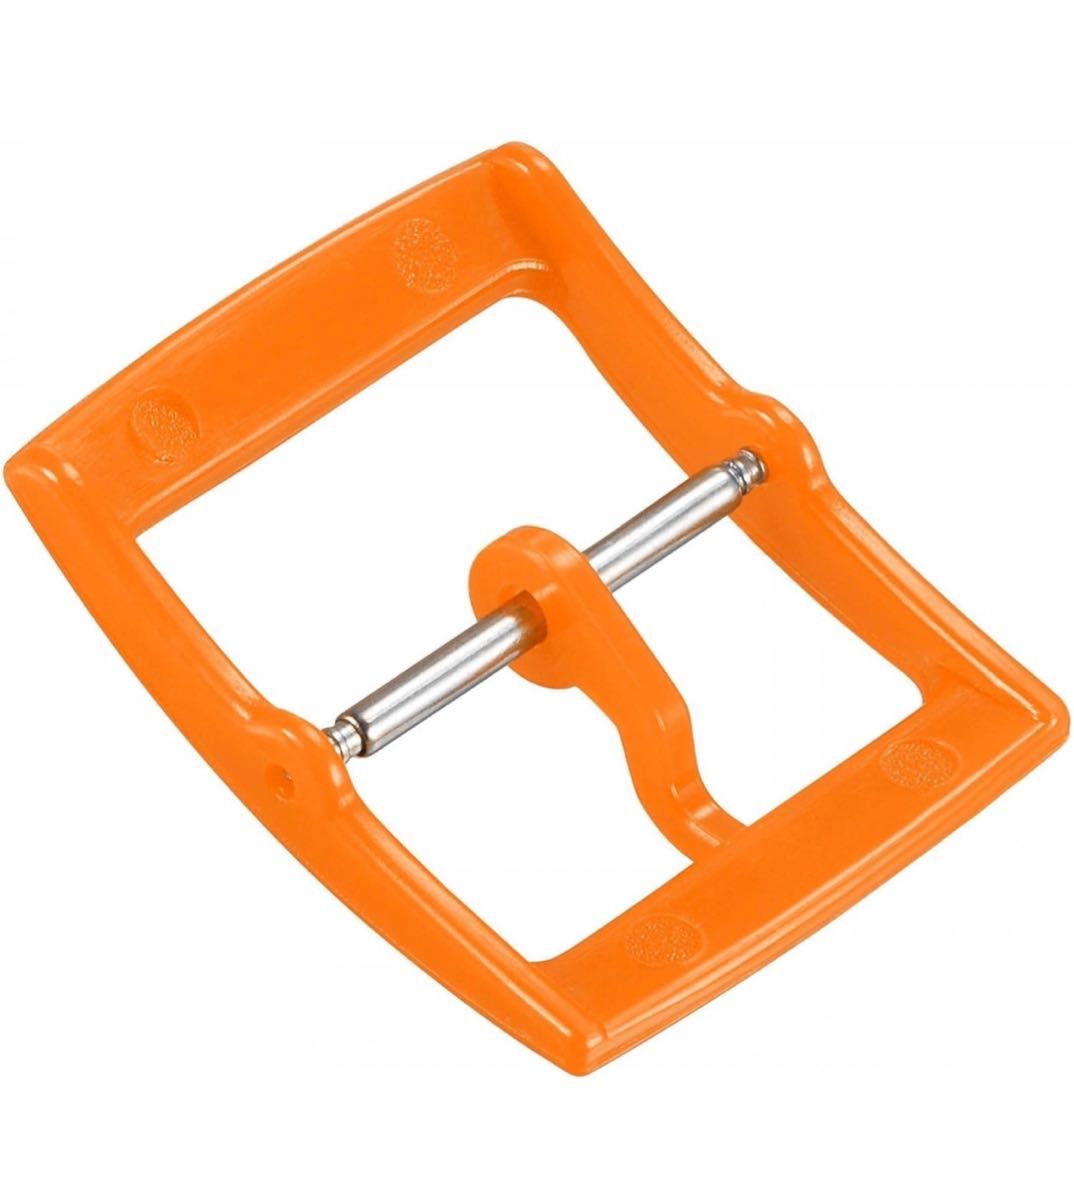 [uxcell] 時計ストラップクラスプ 交換用 プラスチックバックル 16mm幅の時計バンド用 オレンジ 2個入 ベルトバックル